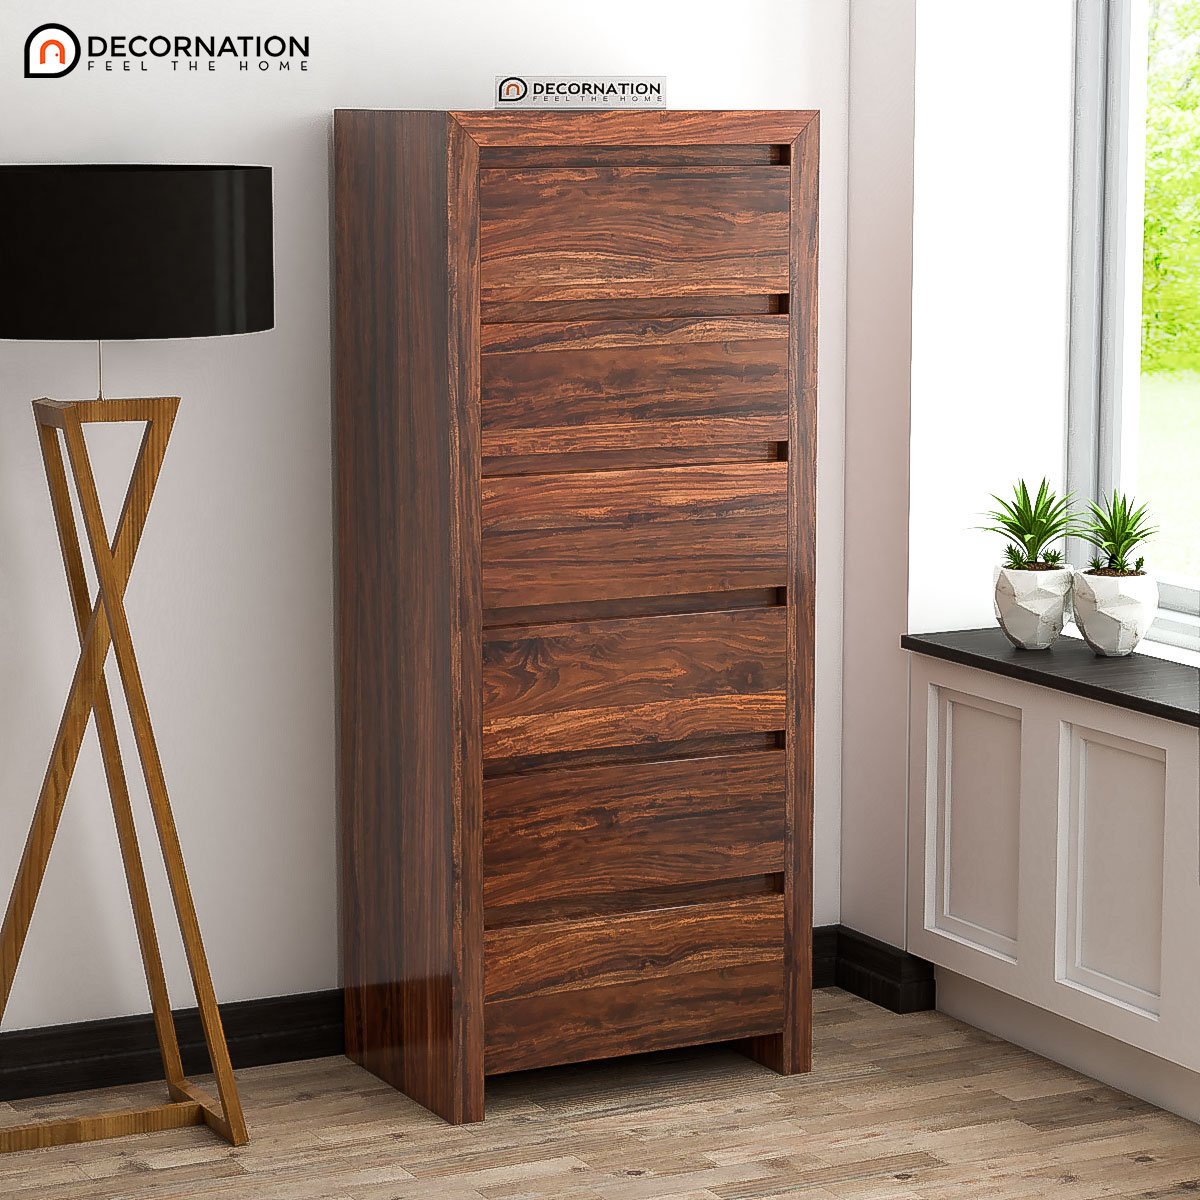 Adara Wooden Storage Cabinet – Natural Finish